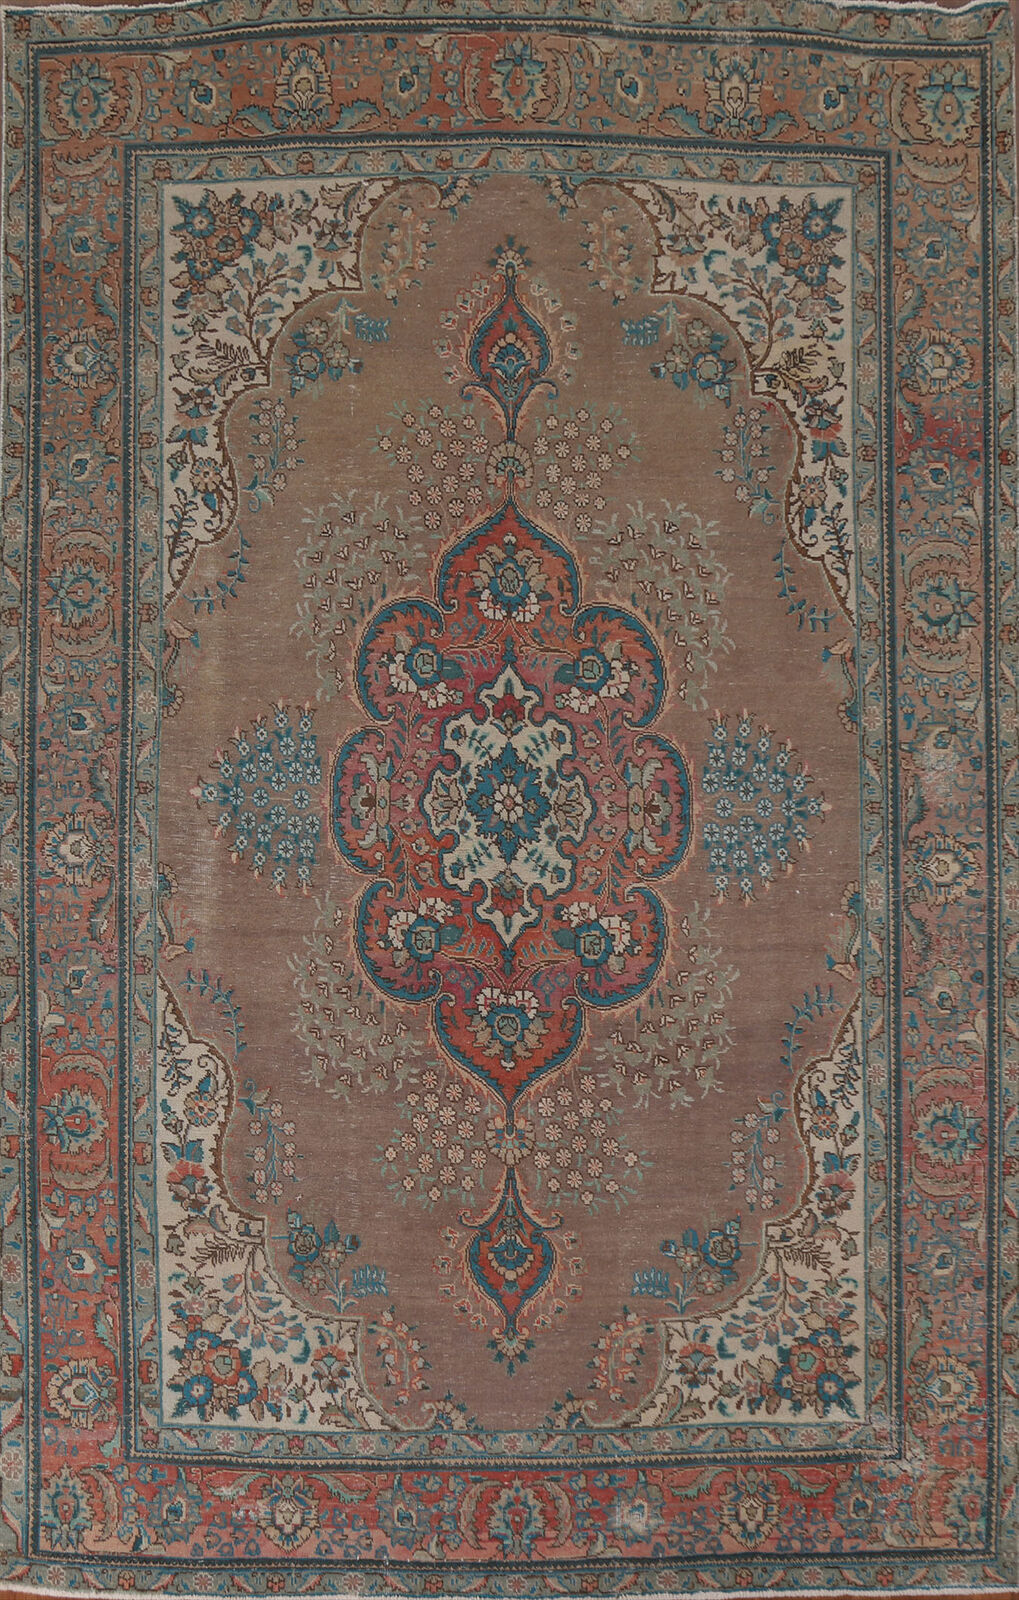 Vintage Brown Traditional Handmade Wool Tebriz Living Room Area Rug 8x10 Carpet